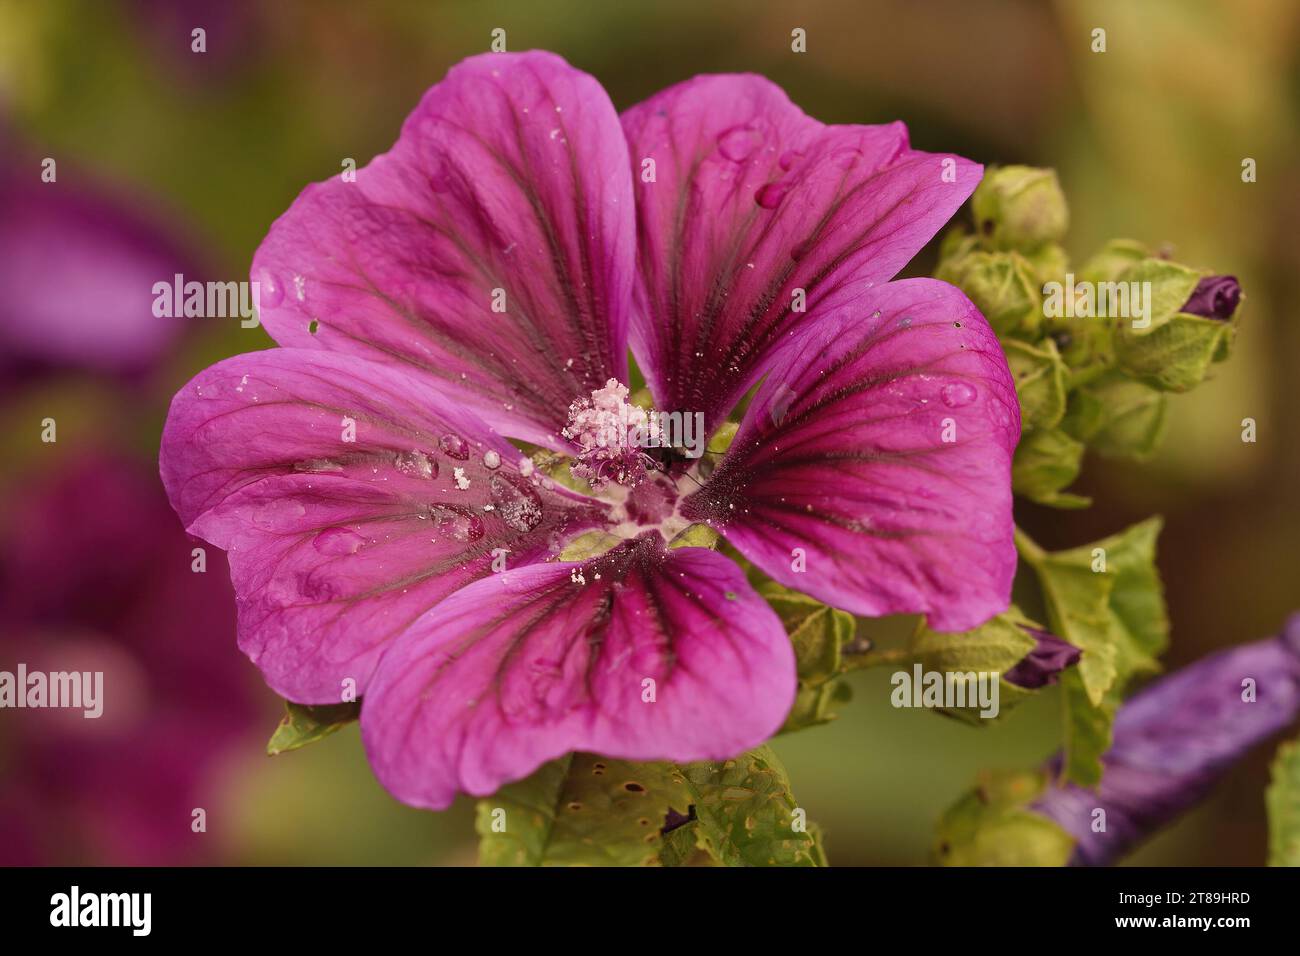 Natural closeup on a colorful satin purple flower of the Tree mallow, Malva arborea Stock Photo